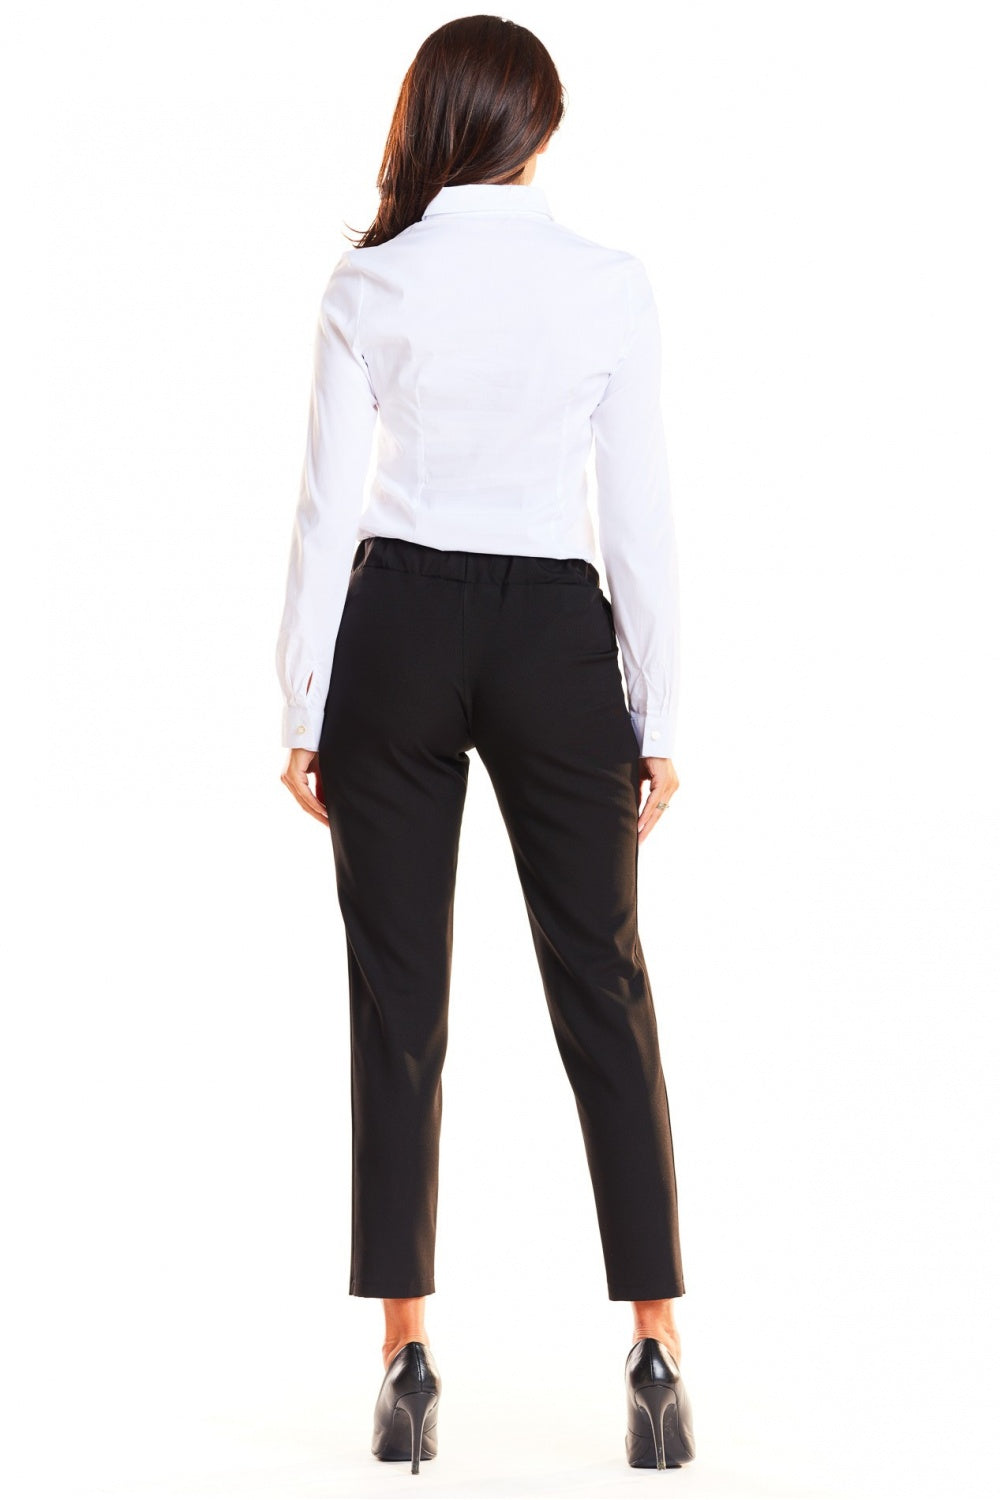 Women trousers model 139987 awama